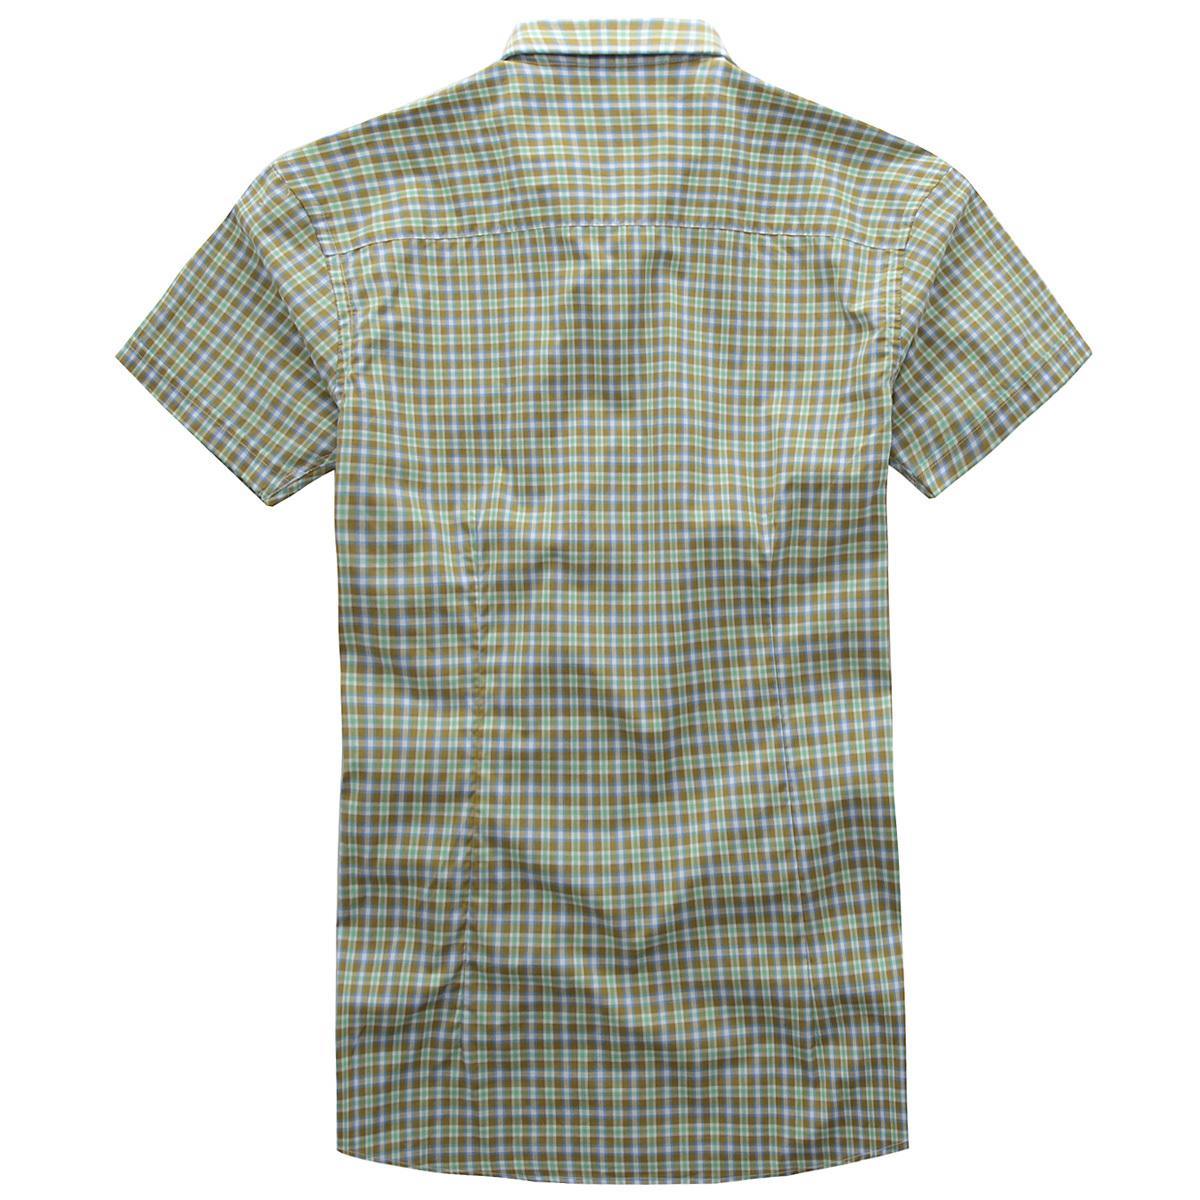 Men's 100% Cotton Short Shirt Made in China